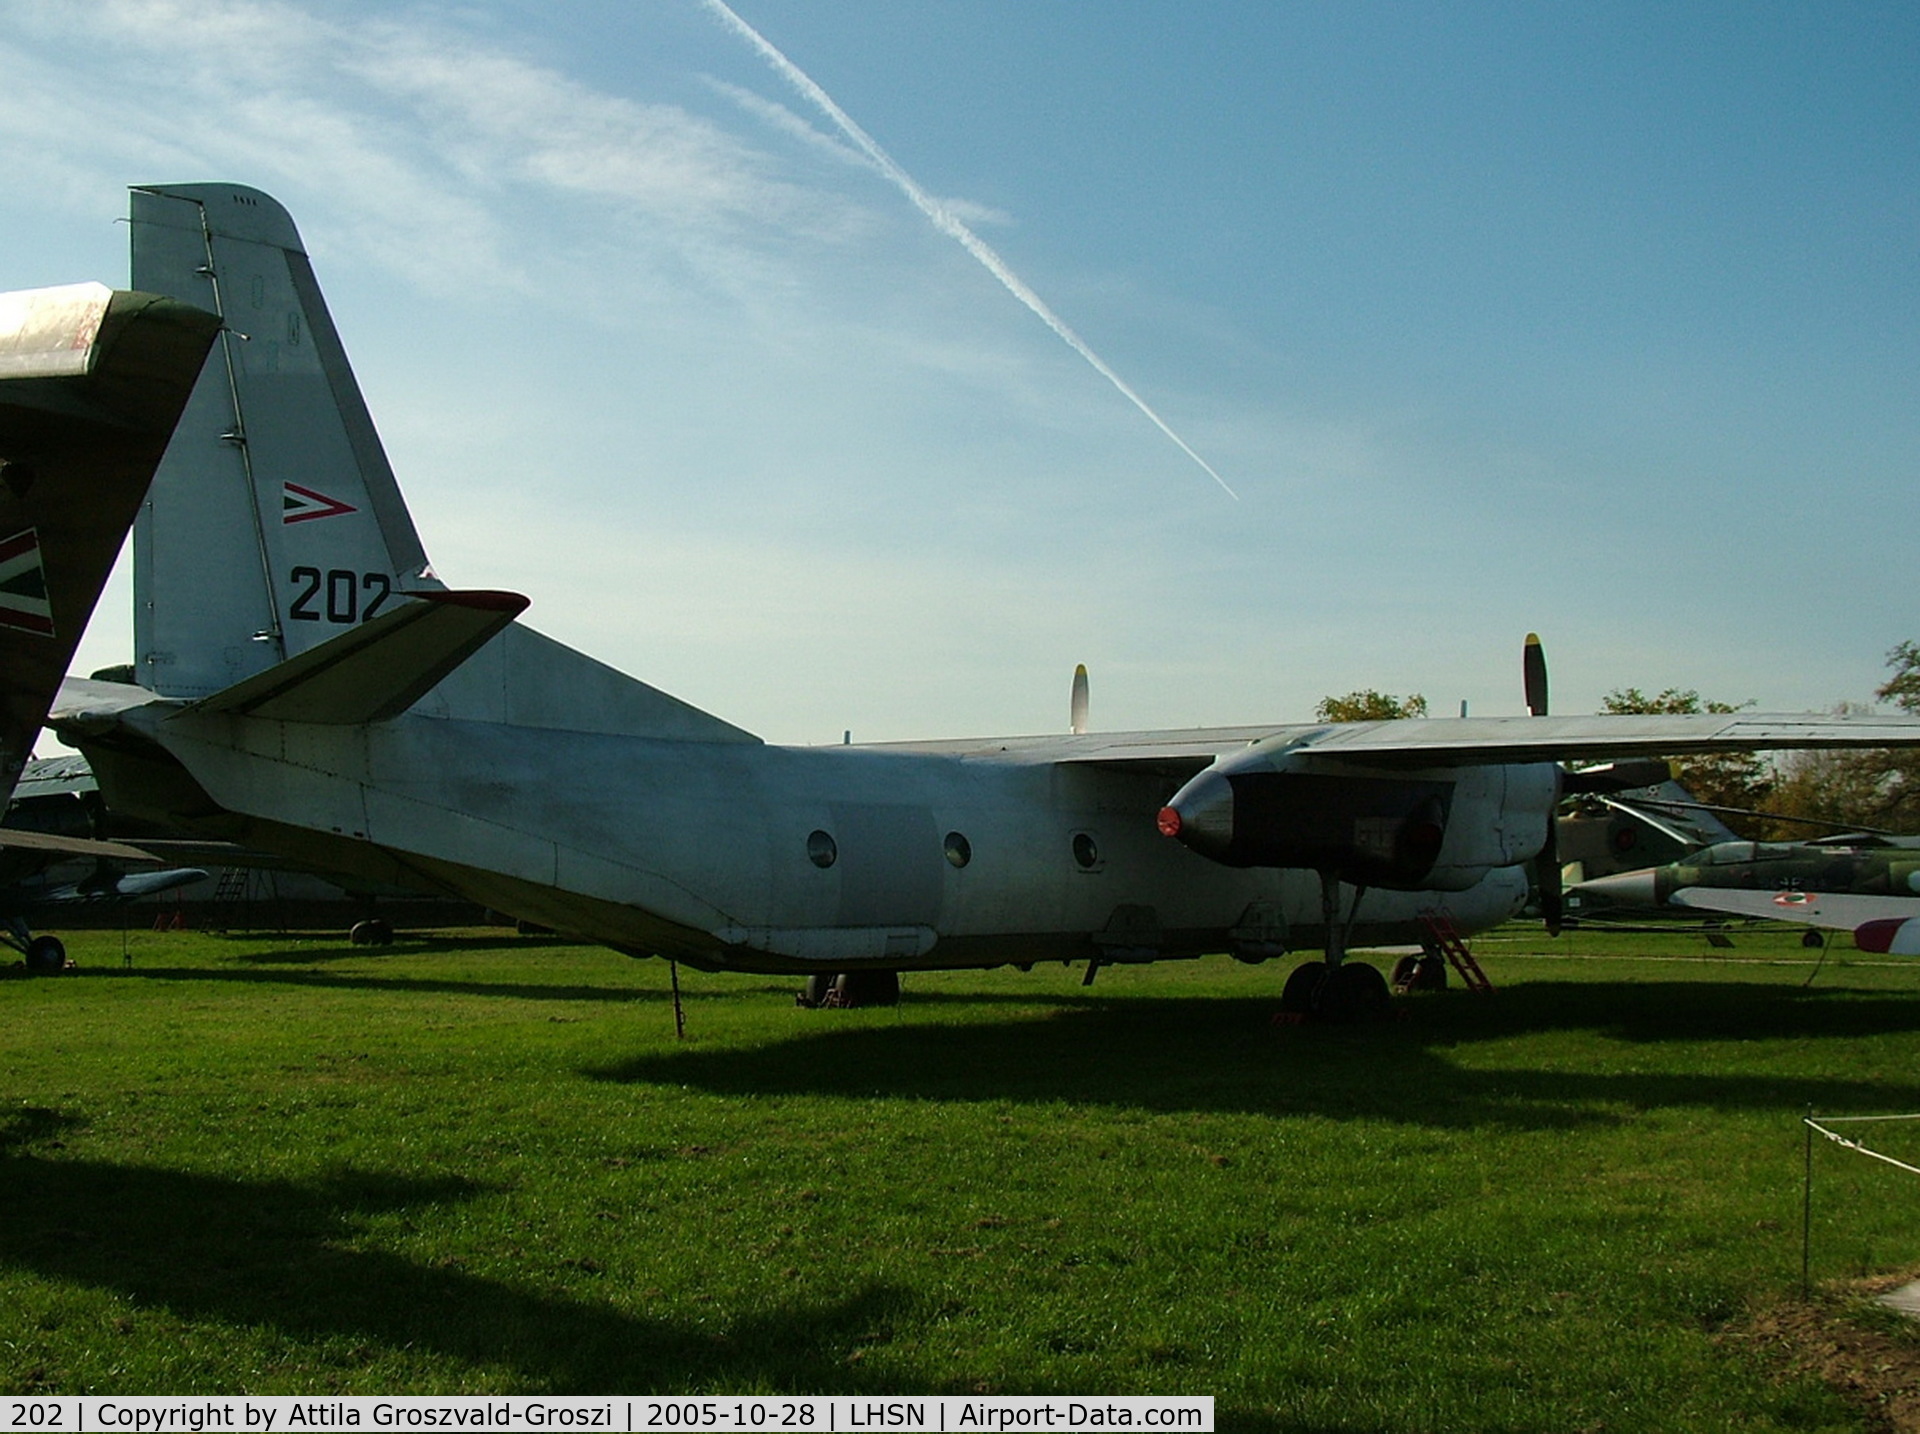 202, 1974 Antonov An-26 C/N 02202, Szolnok airplane museum, Hungary (Hungary is not in operation